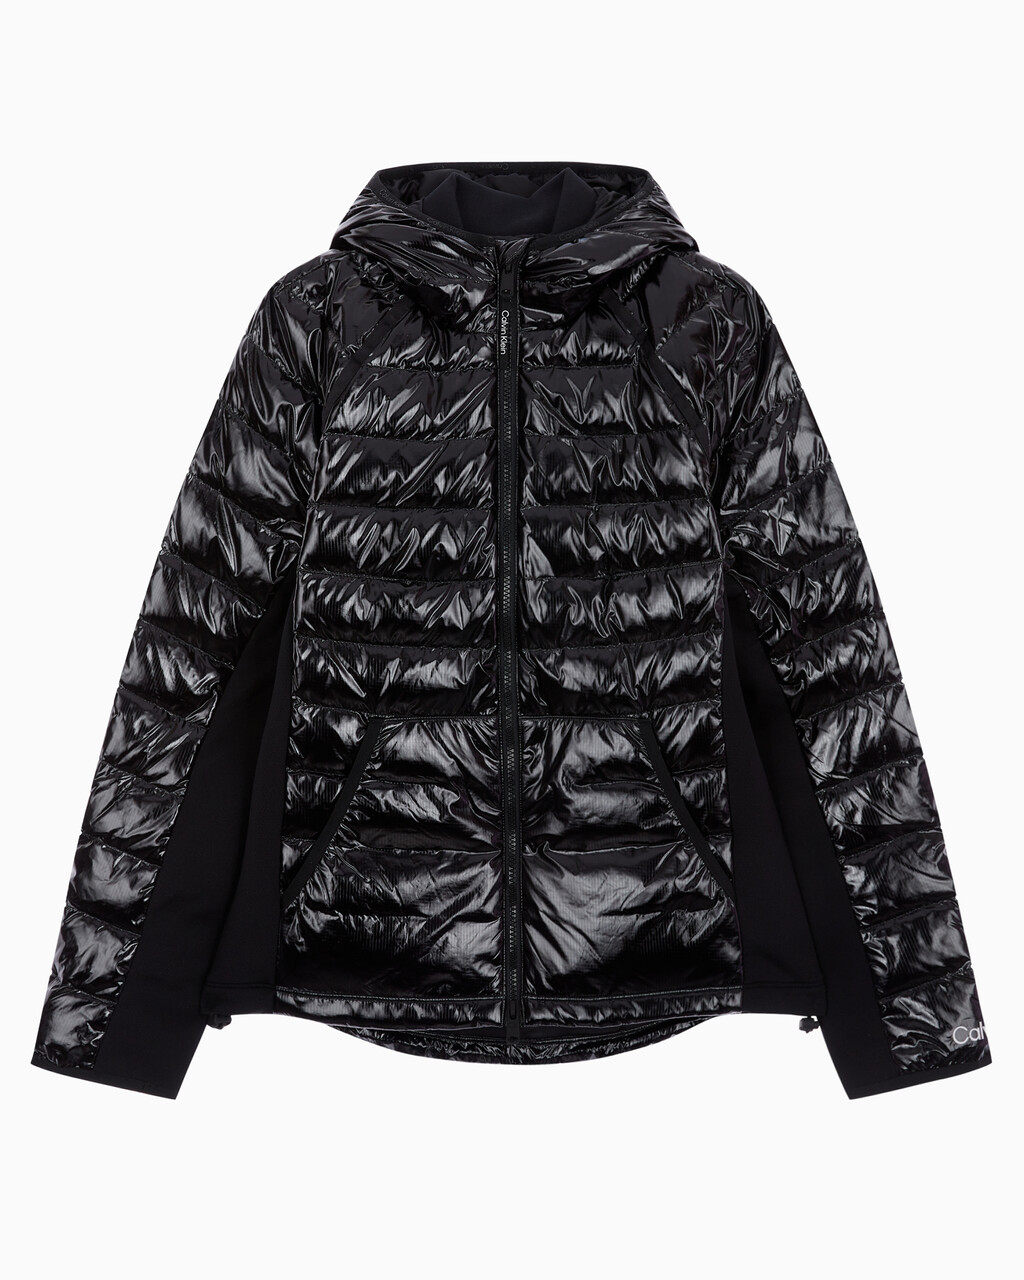 Buy 여성 슬림핏 다운 재킷 in color BLACK